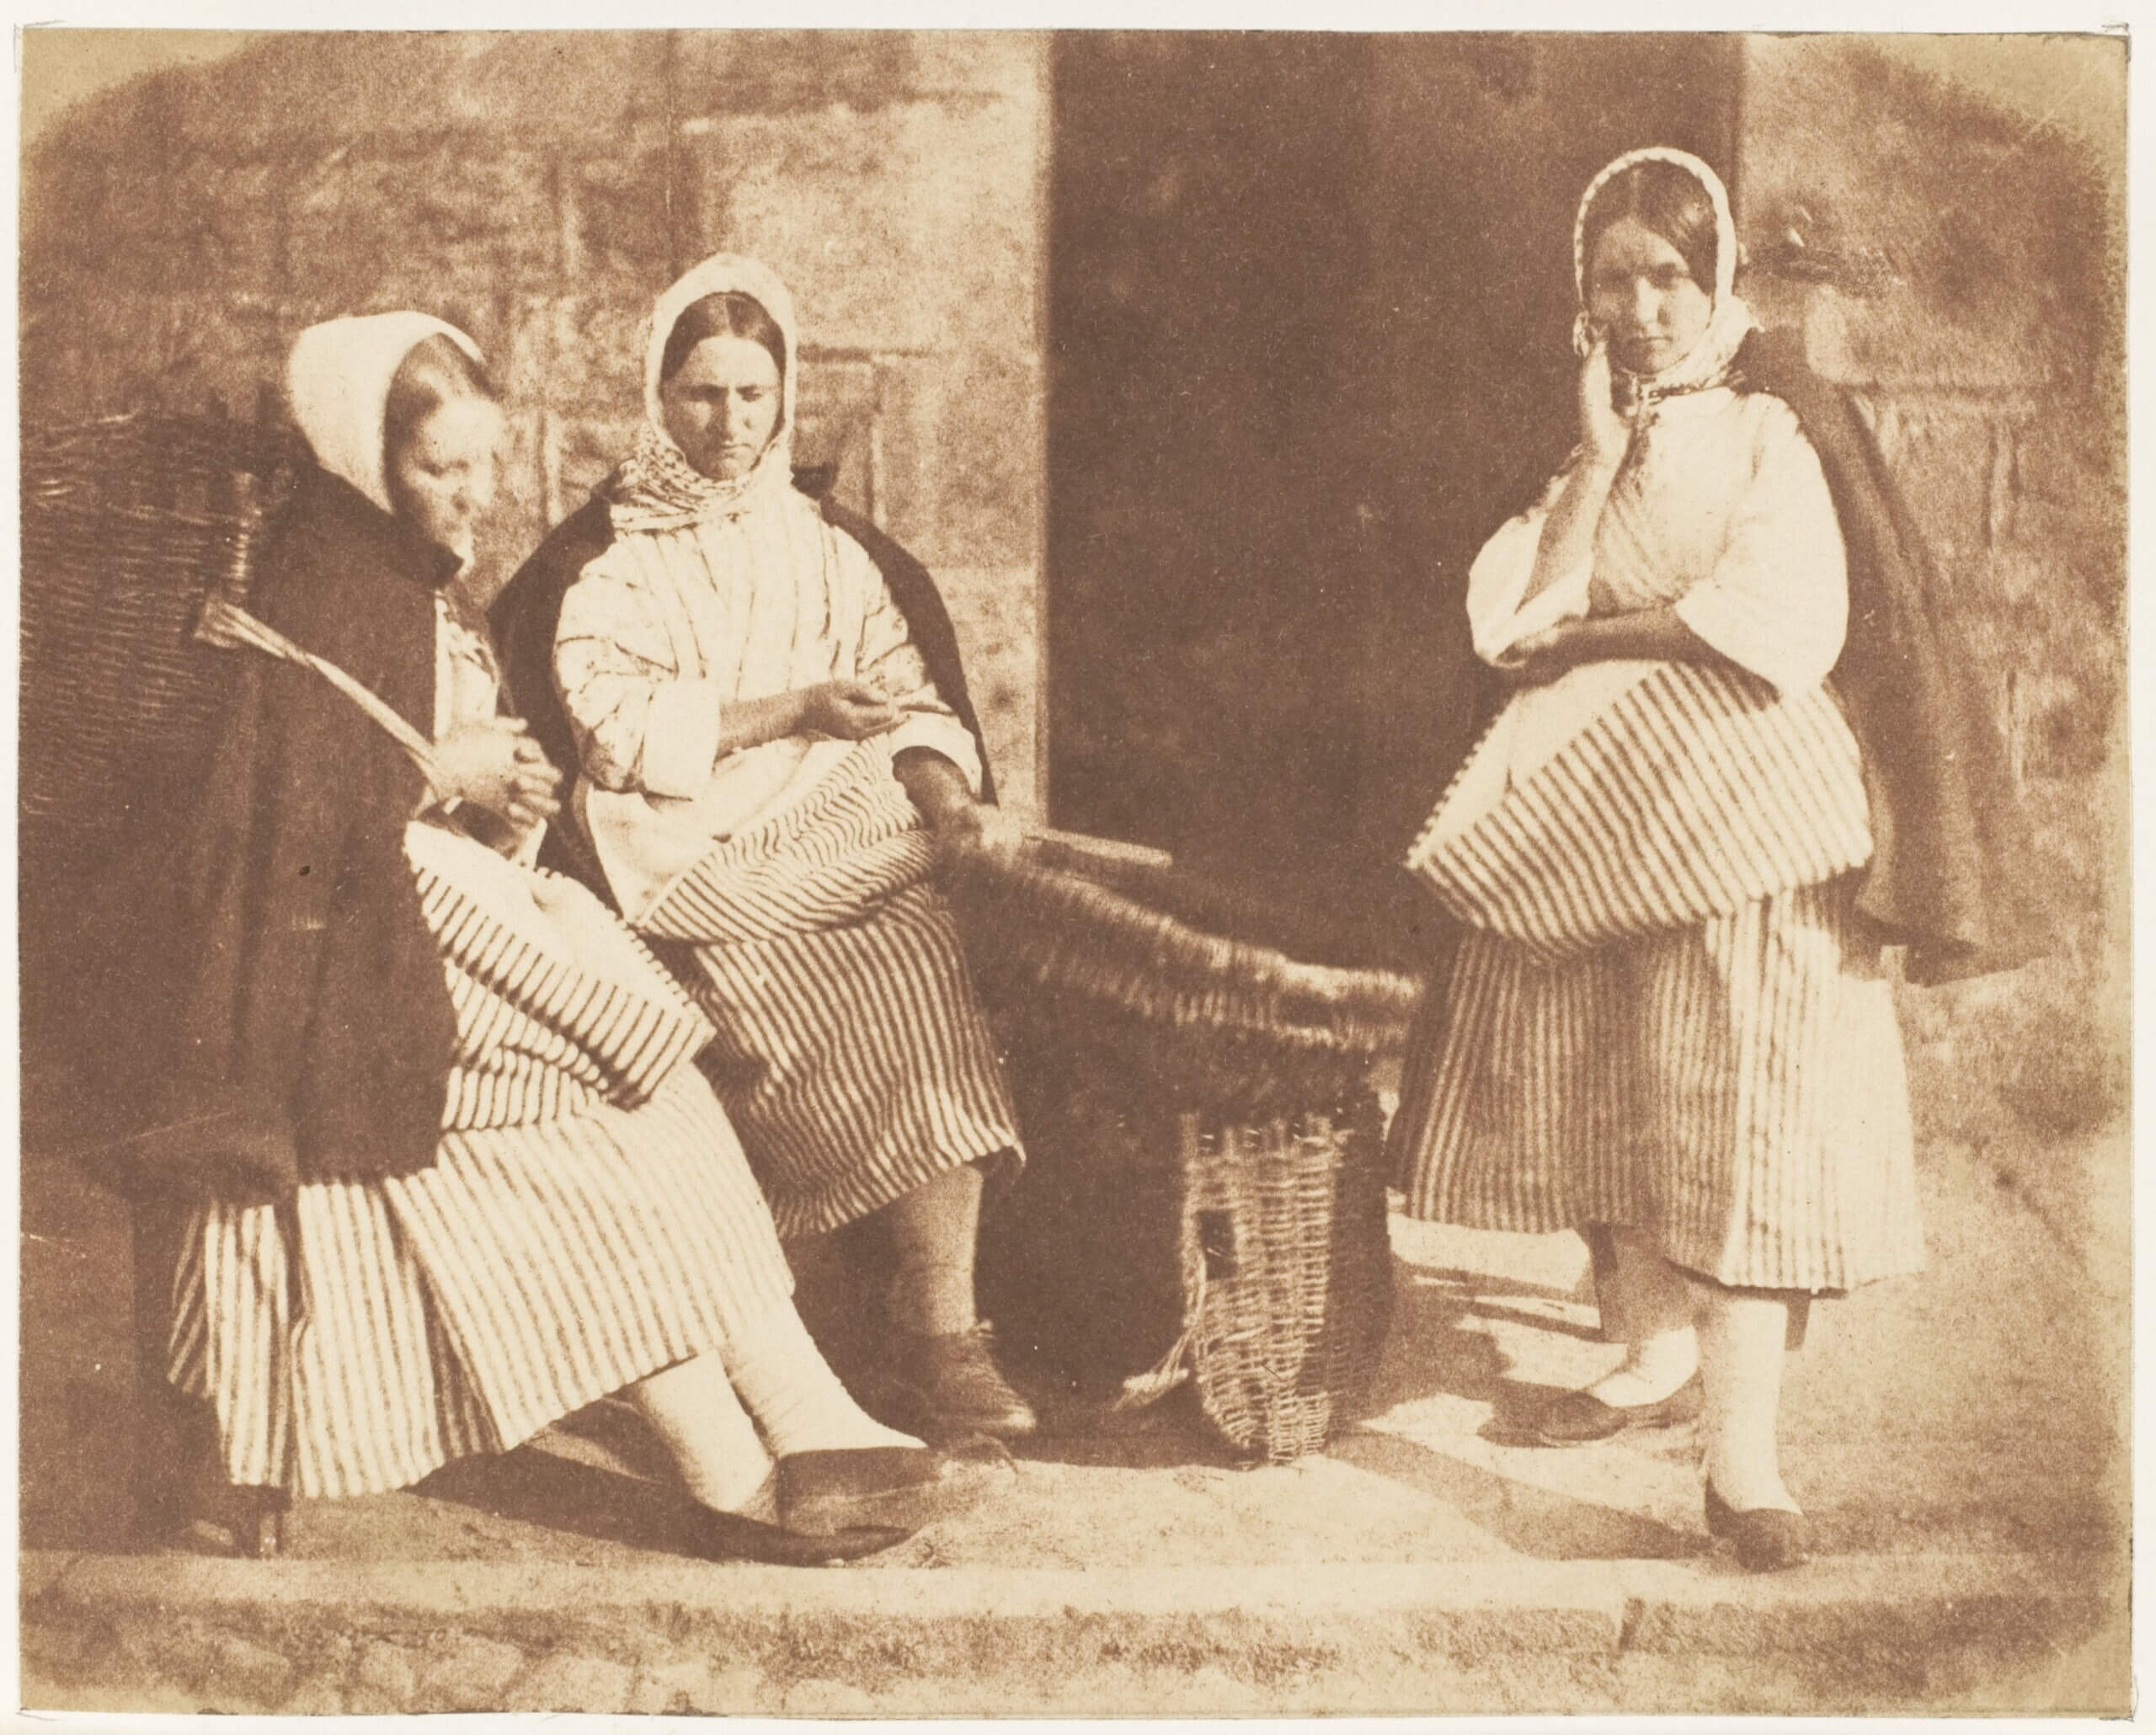 Viviane Sassen on creativity and experimentation - 1854 Photography